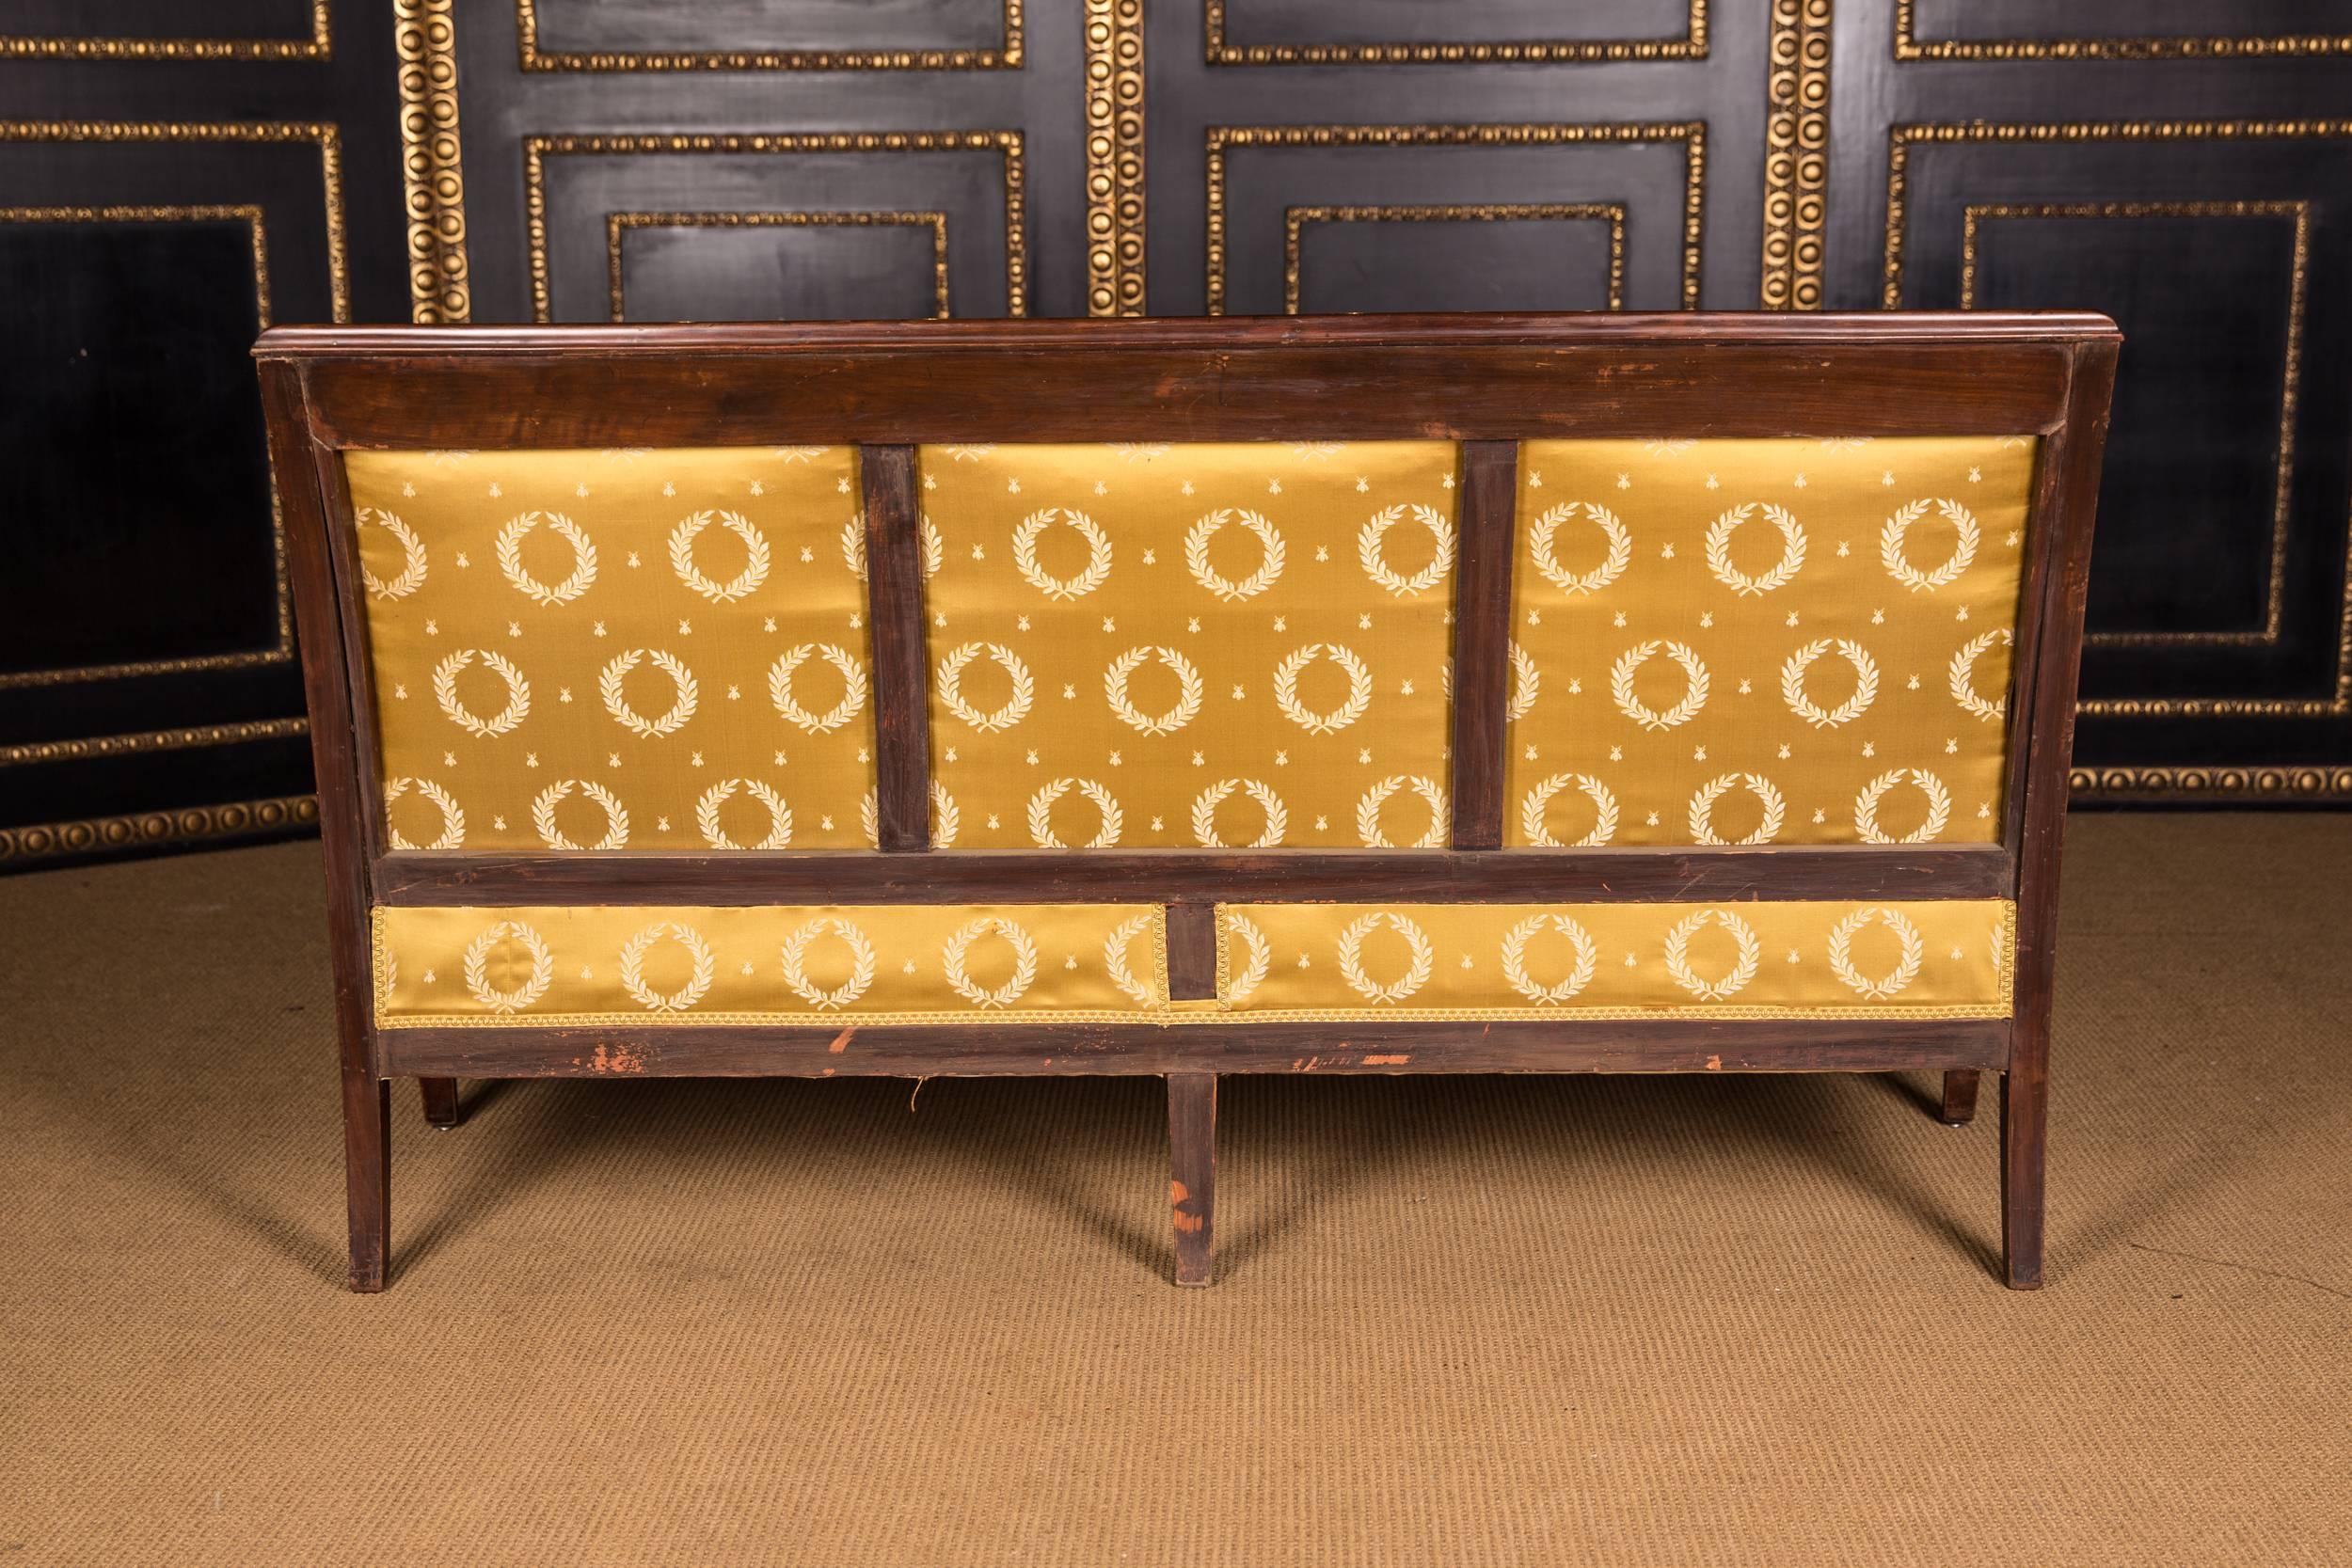 19th Century Original French Empire Sofa and Armchair Set Made from Mahogany (19. Jahrhundert)